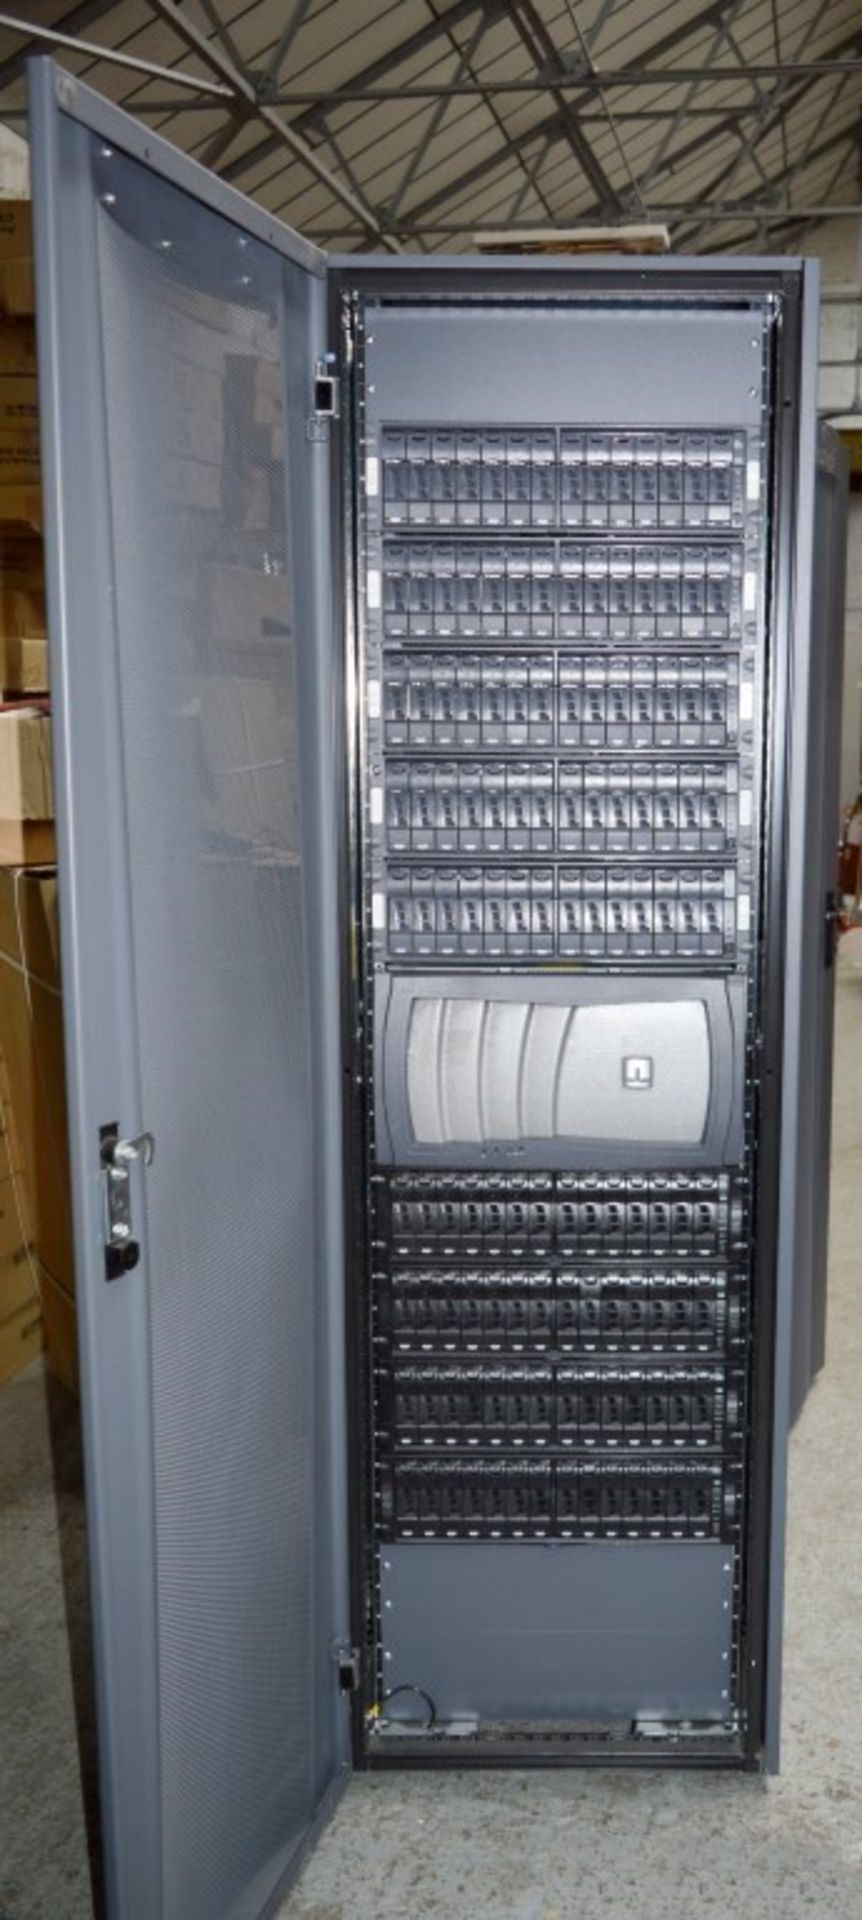 1 x Network Appliance Netapp Filer - Netapp Data Rack With 1 x FAS3140 Controller and 9 x DS14 MK2